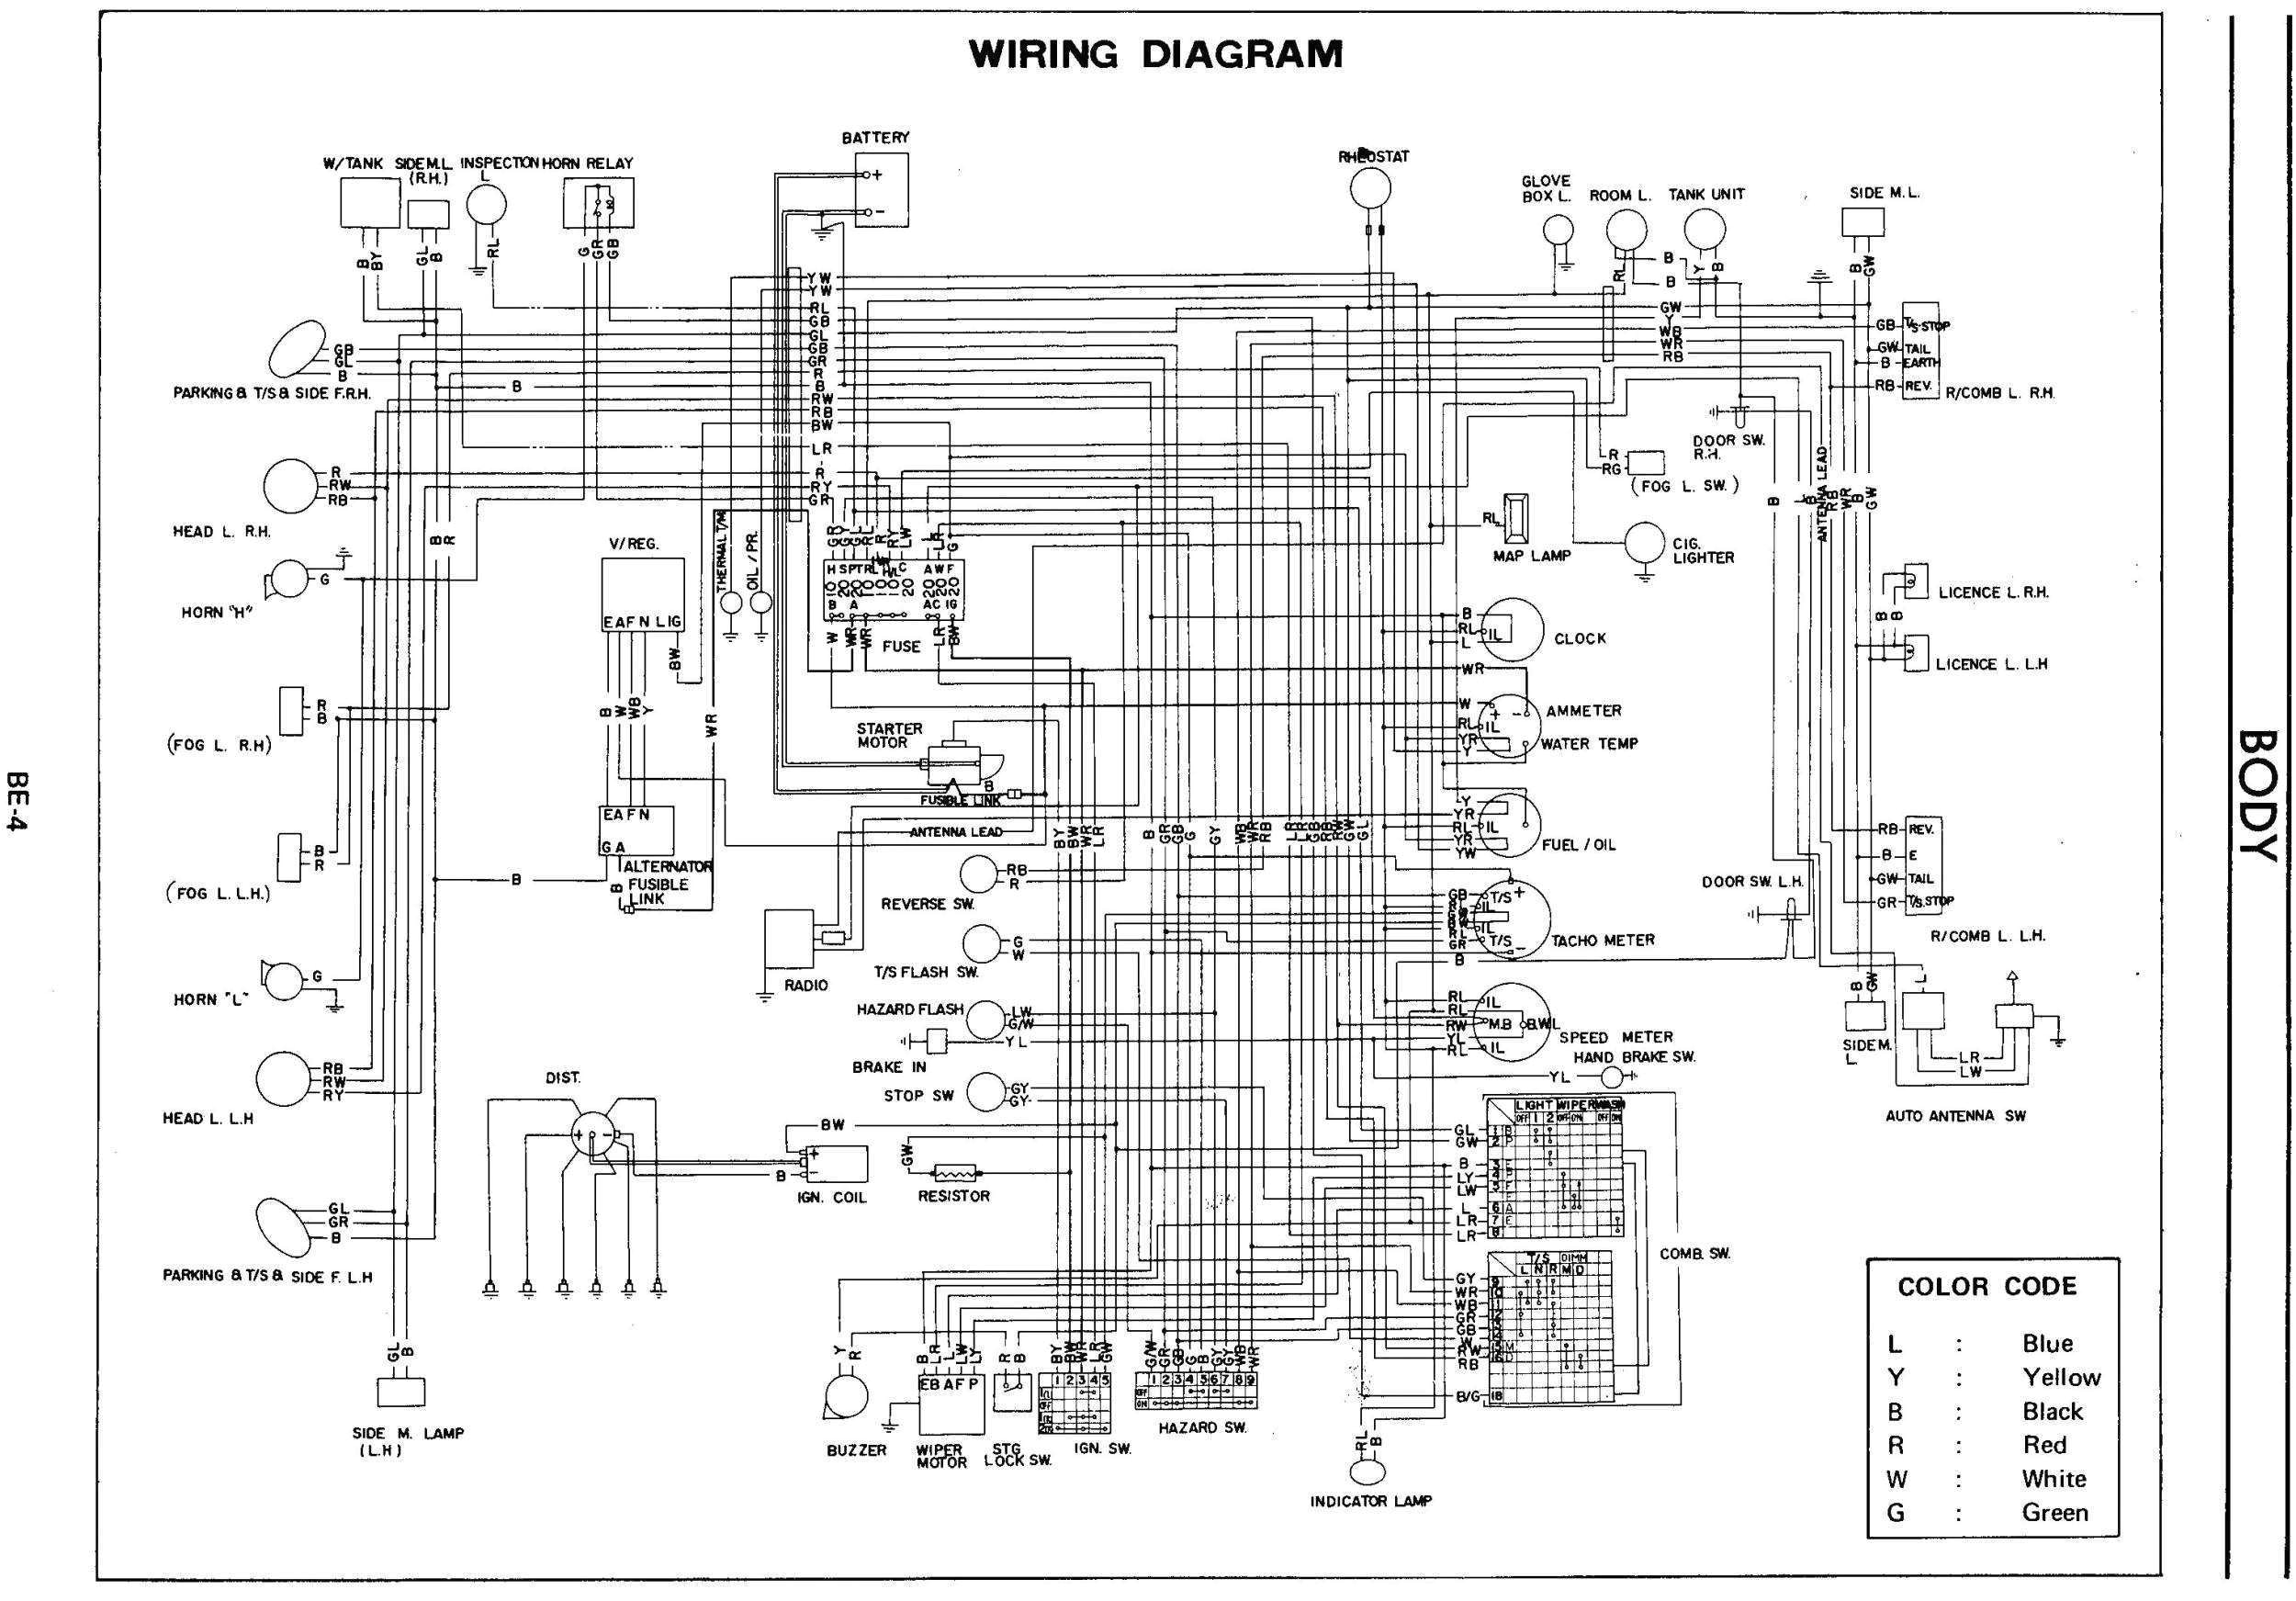 thomas wiring diagrams library wiring diagram thomas c2 school bus wiring diagrams thomas c2 wiring diagram